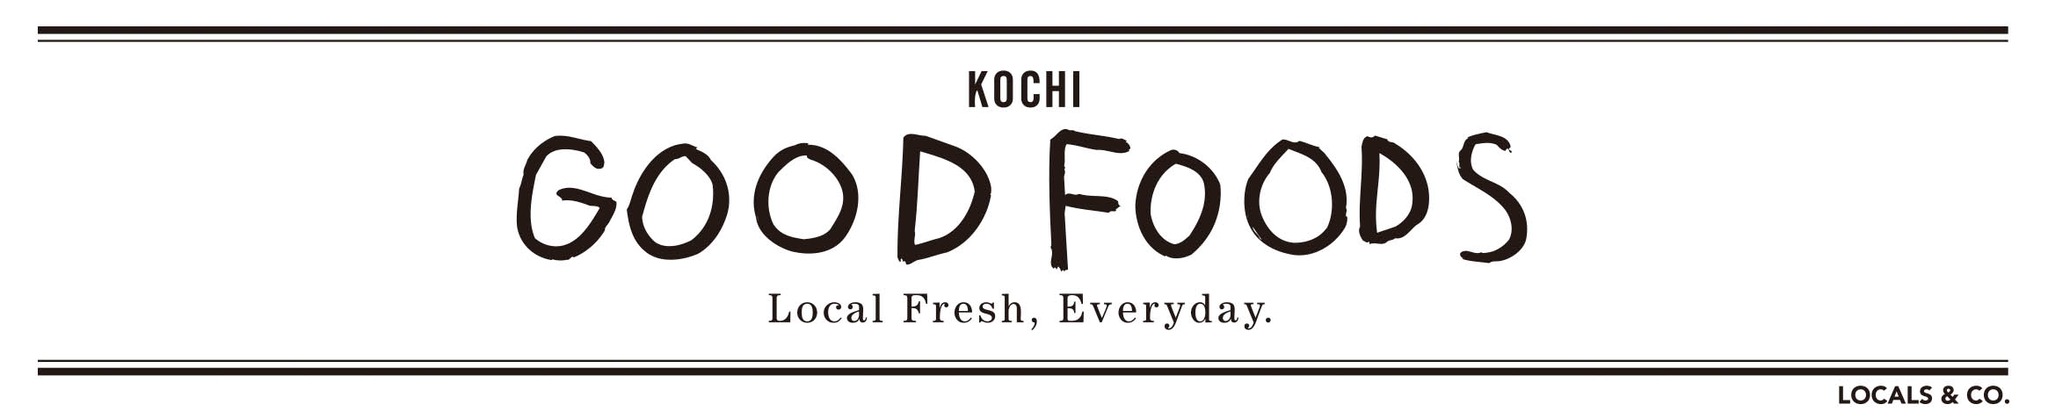 KOCHI GOOD FOODS